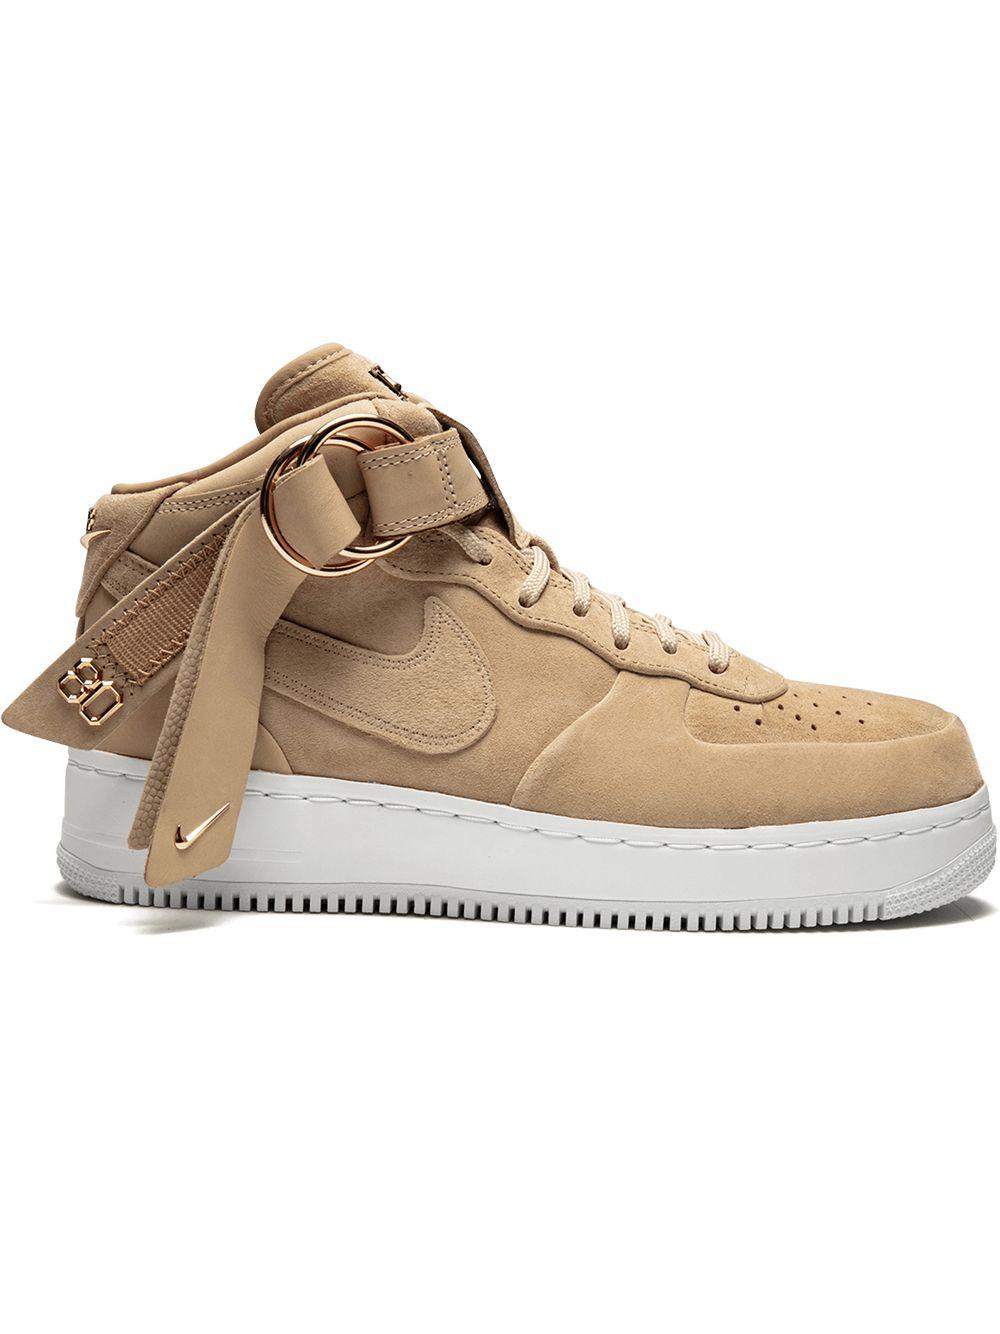 Nike Leather Air Force 1 Mid Cmft V Cruz Sneakers in Brown for Men - Lyst